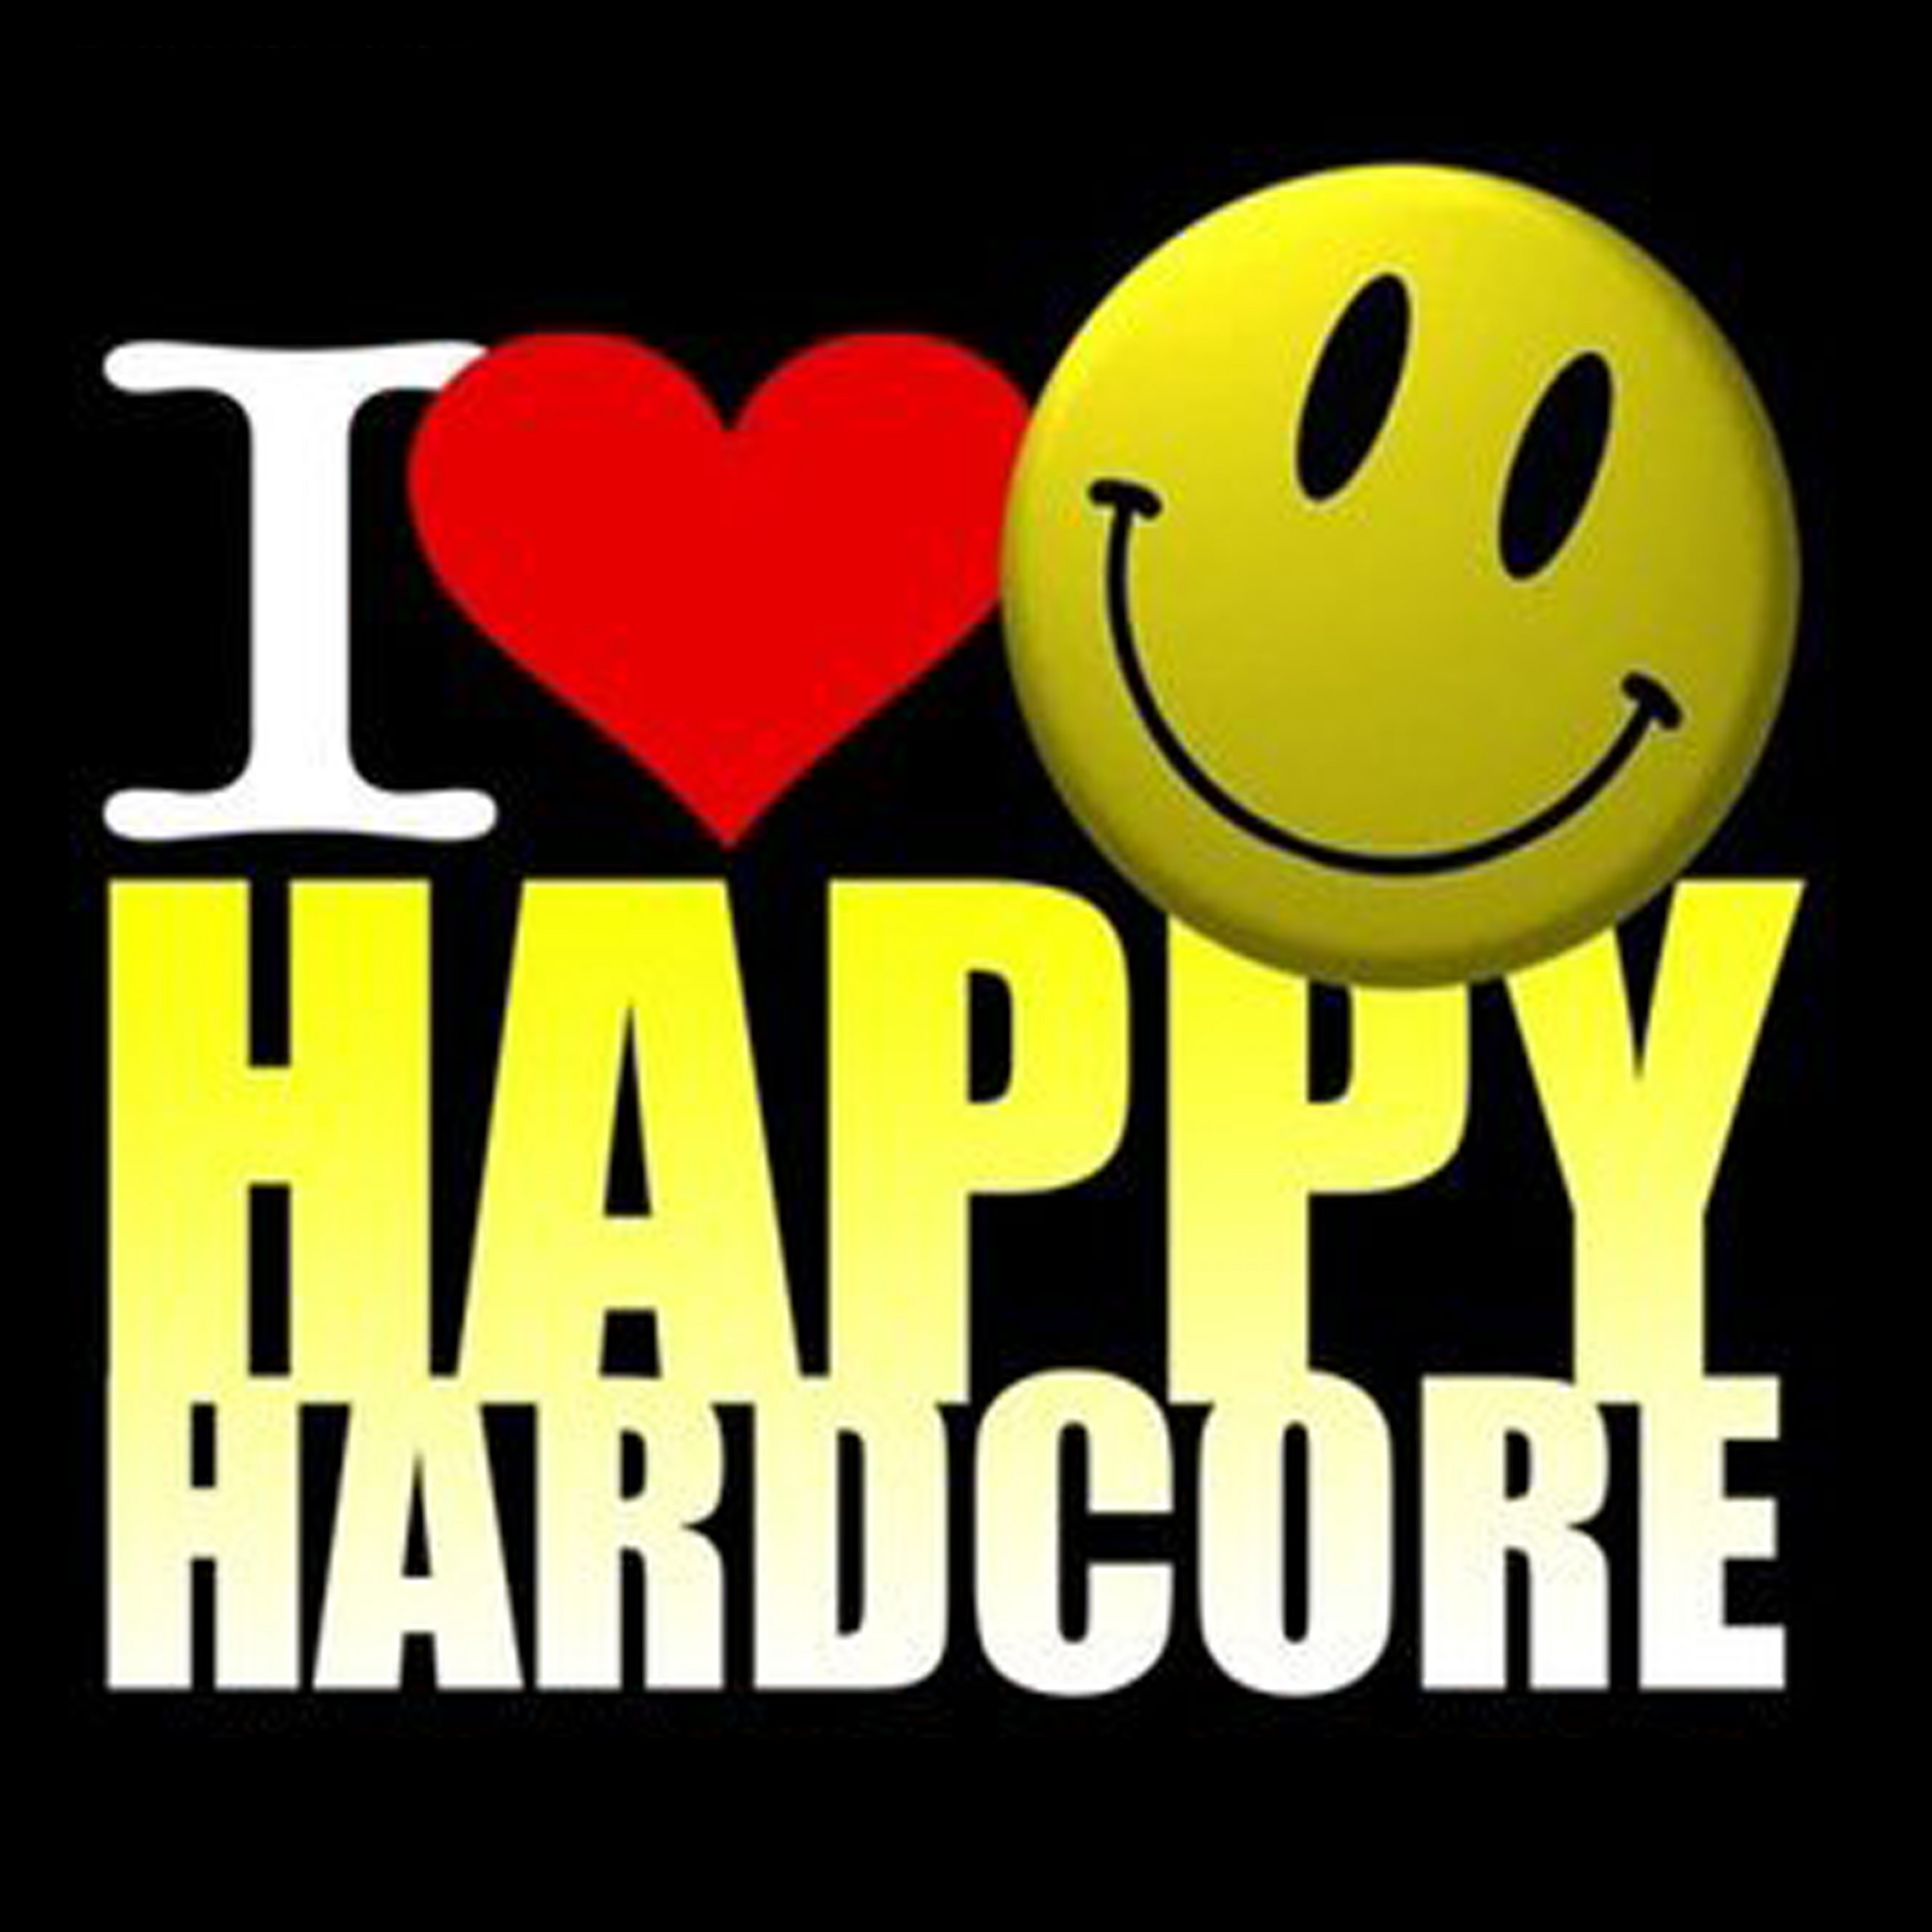 I Love Happy Hardcore